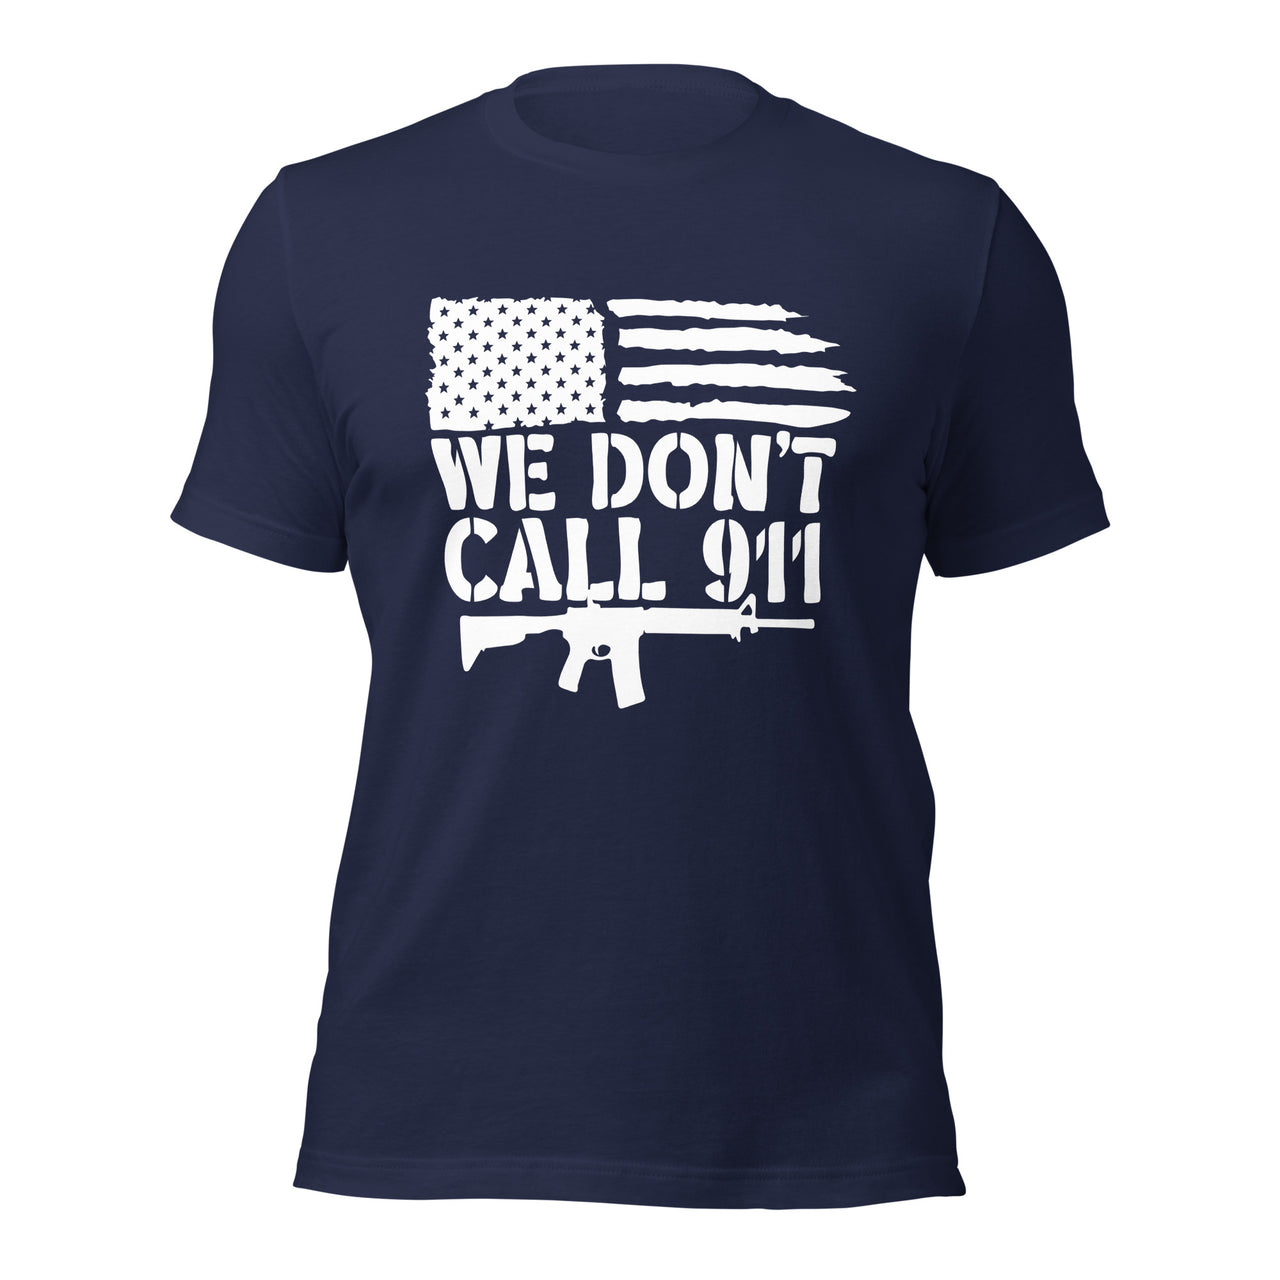 We Don't Call 911 AR & American Flag Unisex t-shirt